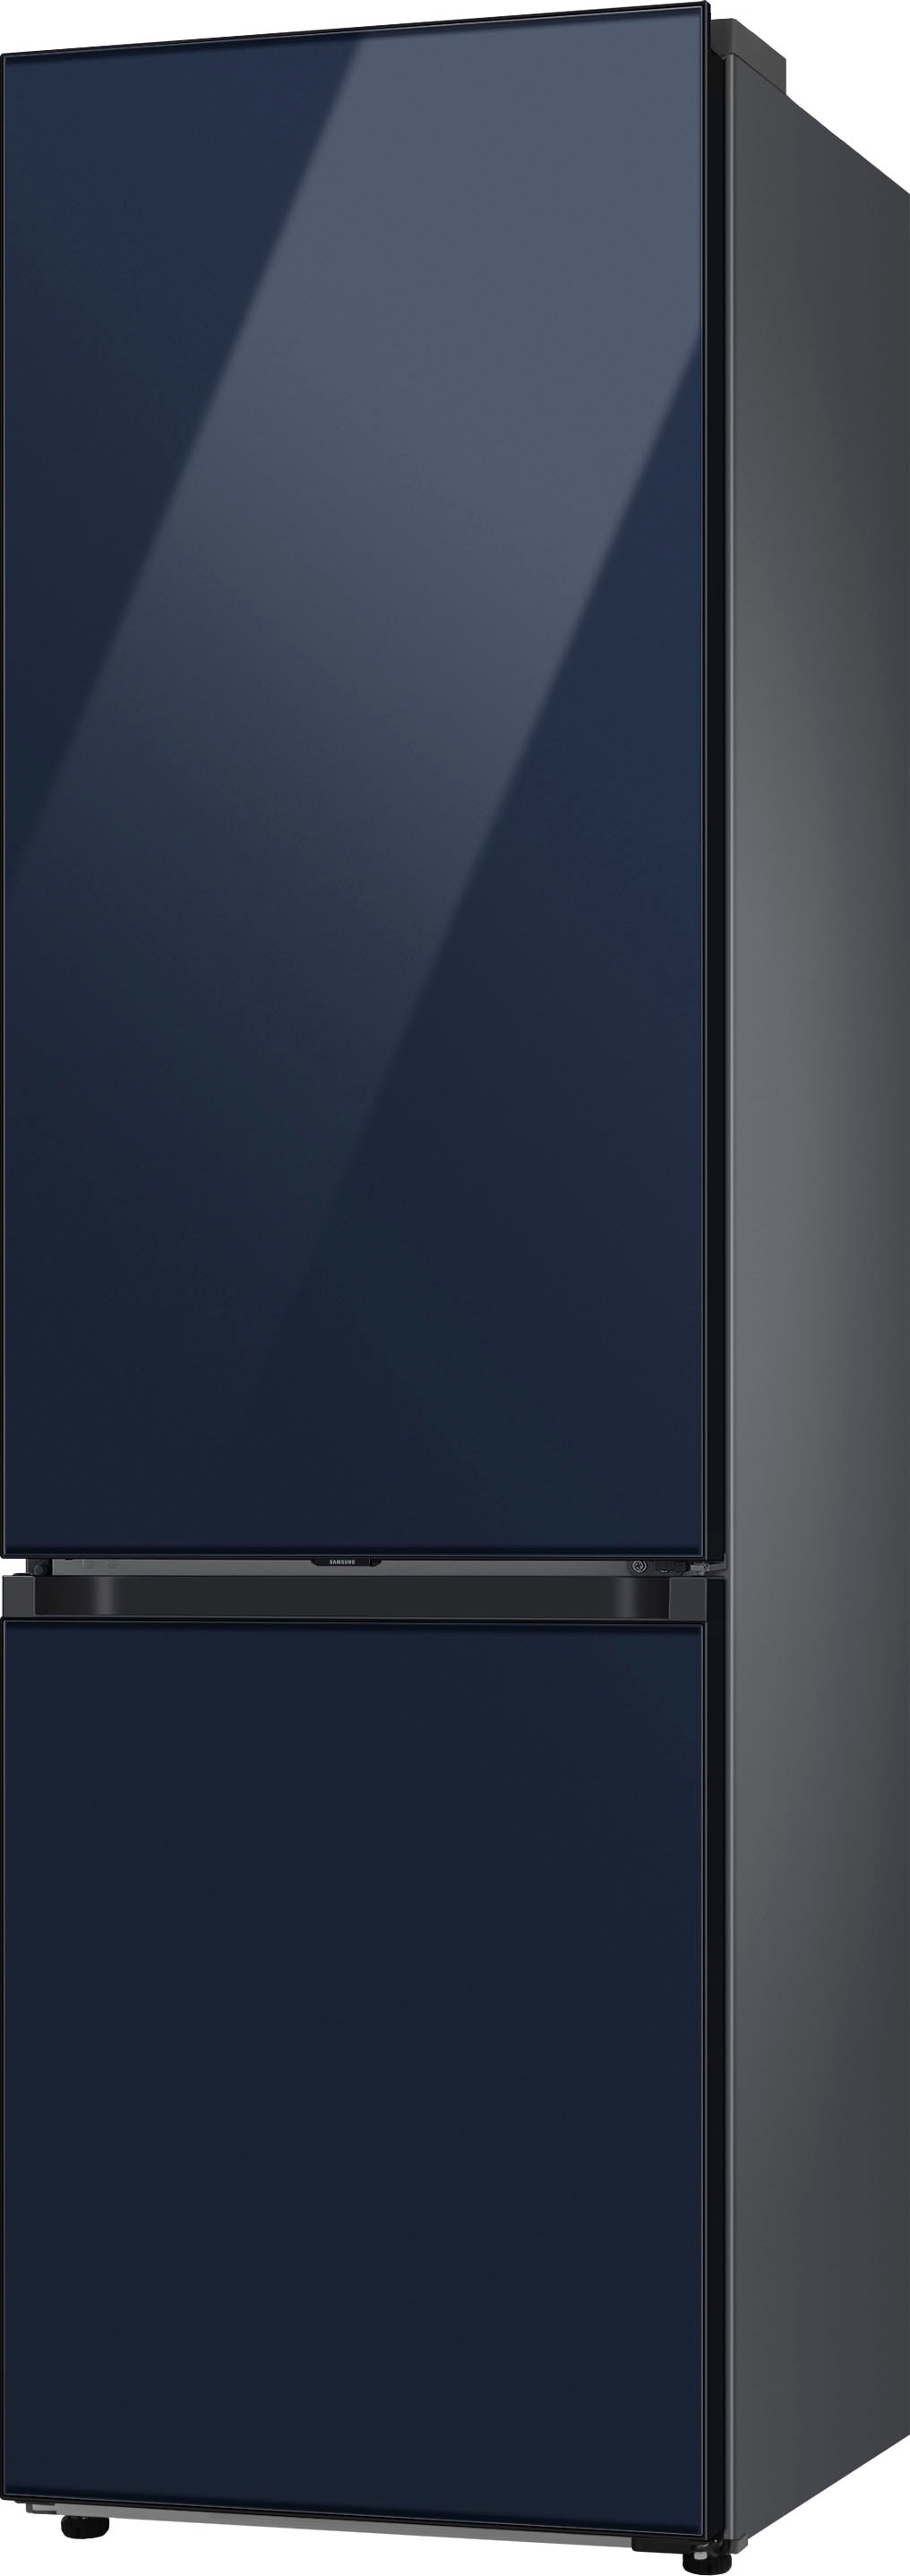 Samsung Kühl-/Gefrierkombination »RL38C6B6C41«, RL38C6B6C41, 203 cm hoch, 59,5 cm breit